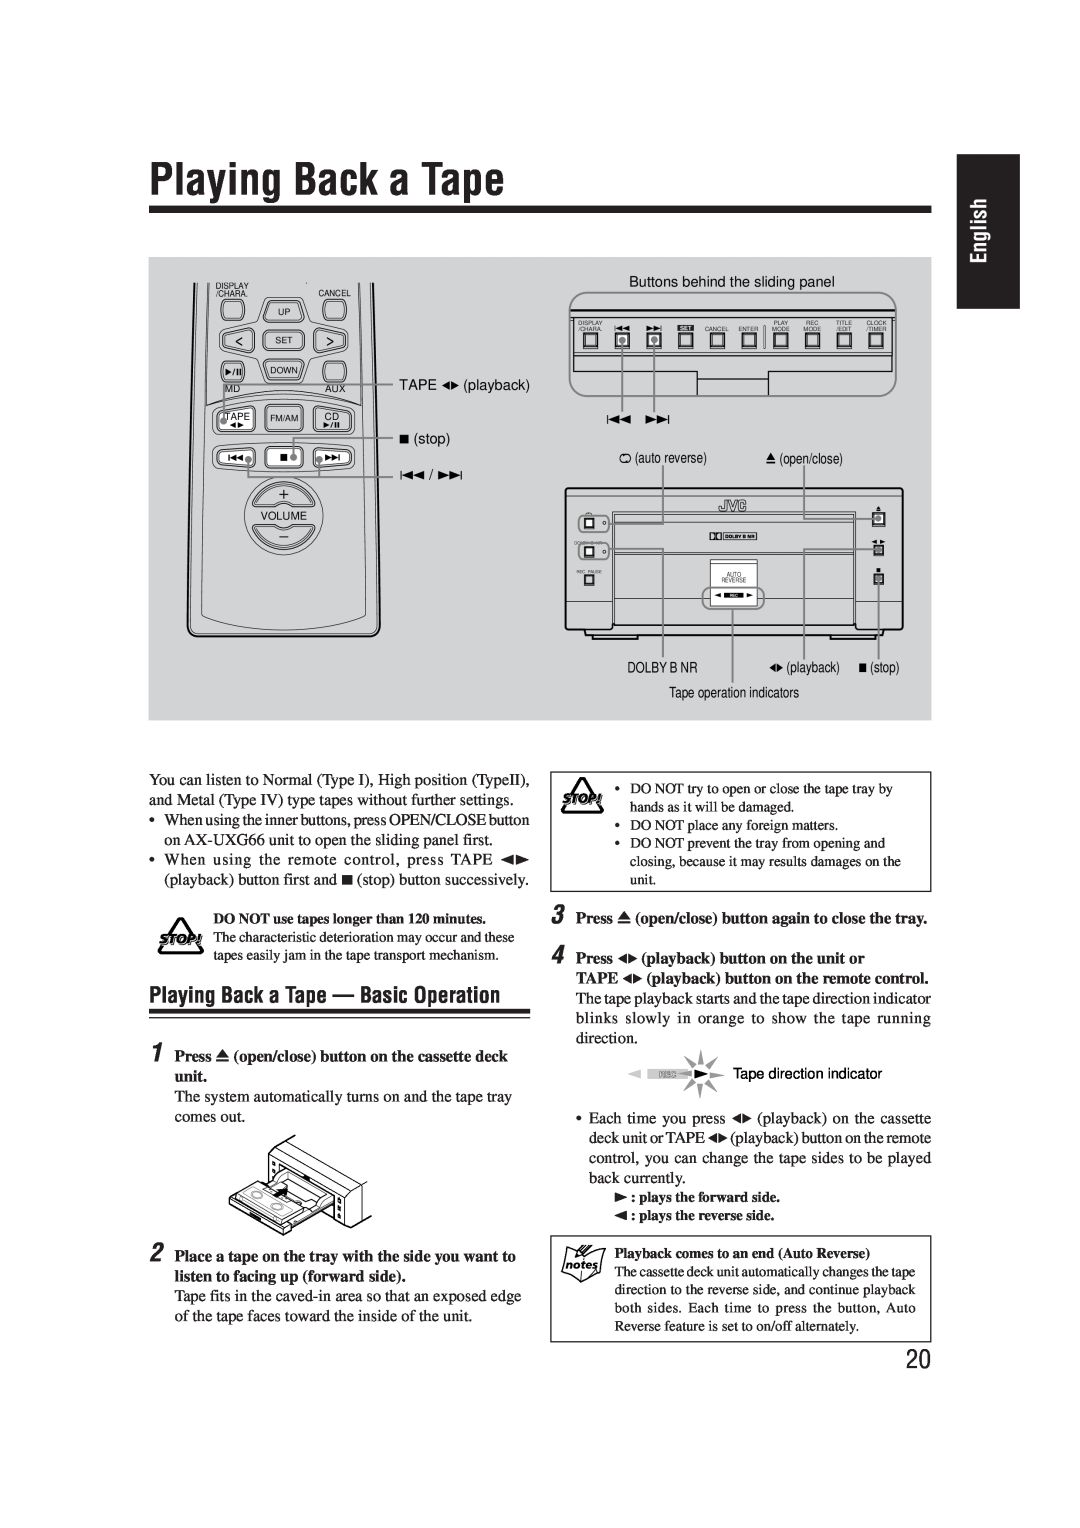 JVC SP-UXG66, TD-UXG66, XT-UXG66 Playing Back a Tape - Basic Operation, English, Press `playback button on the unit or 